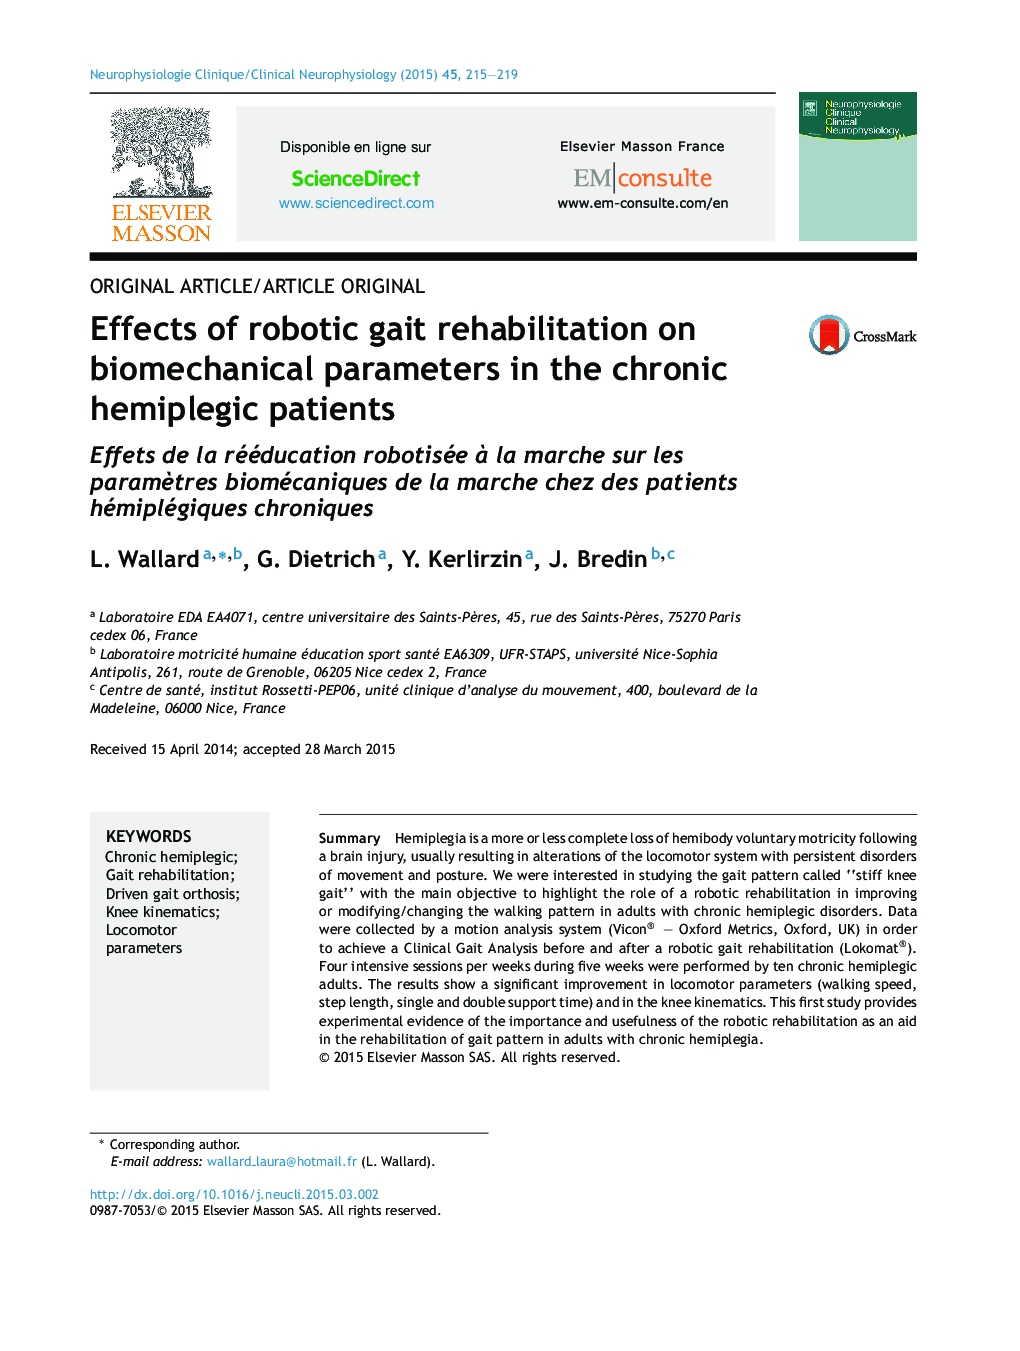 Effects of robotic gait rehabilitation on biomechanical parameters in the chronic hemiplegic patients